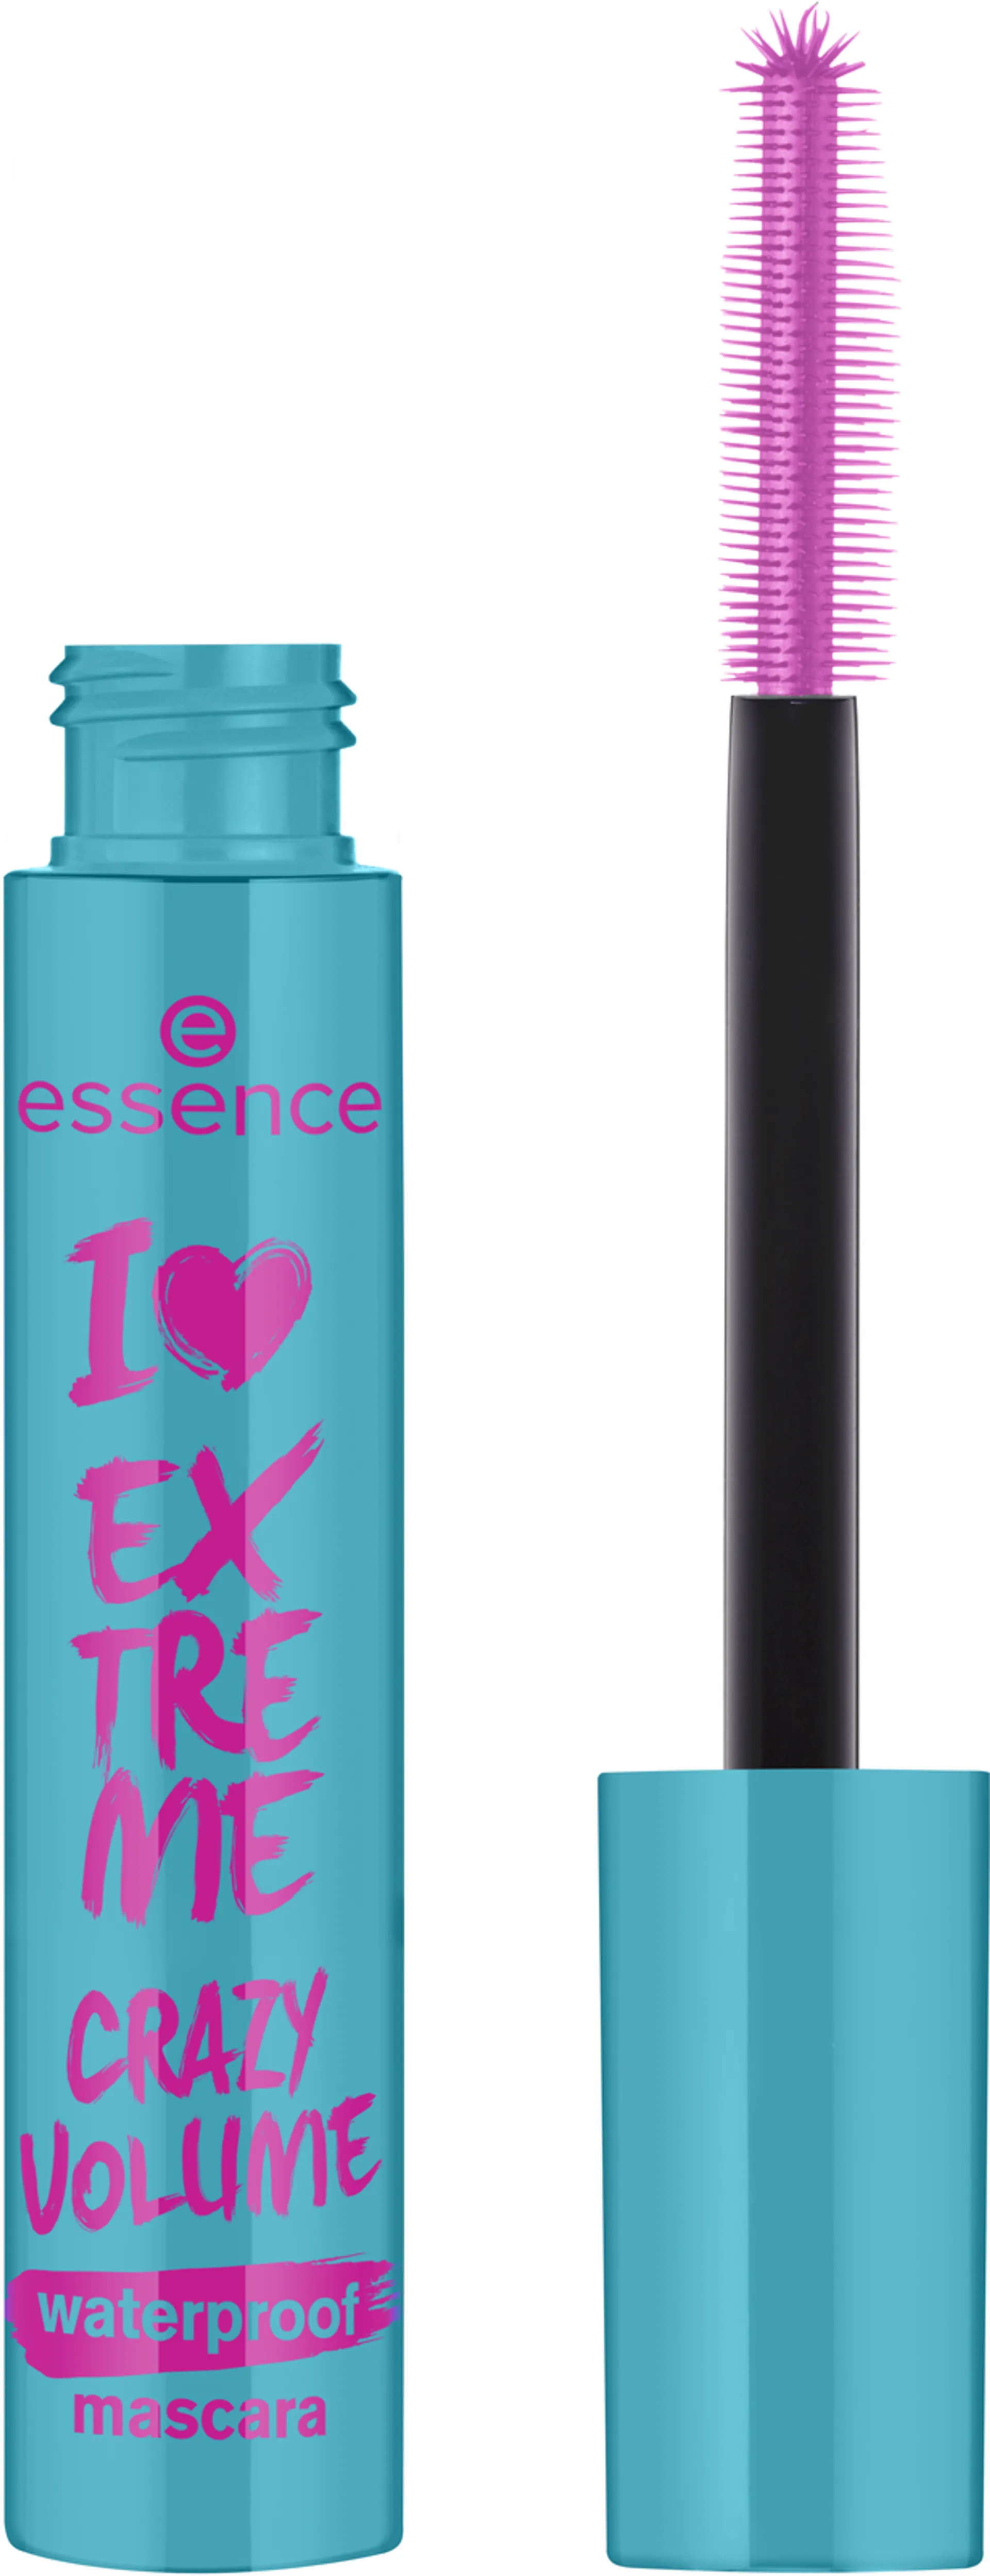 essence I LOVE EXTREME CRAZY VOLUME waterproof mascara 12 ml - 1